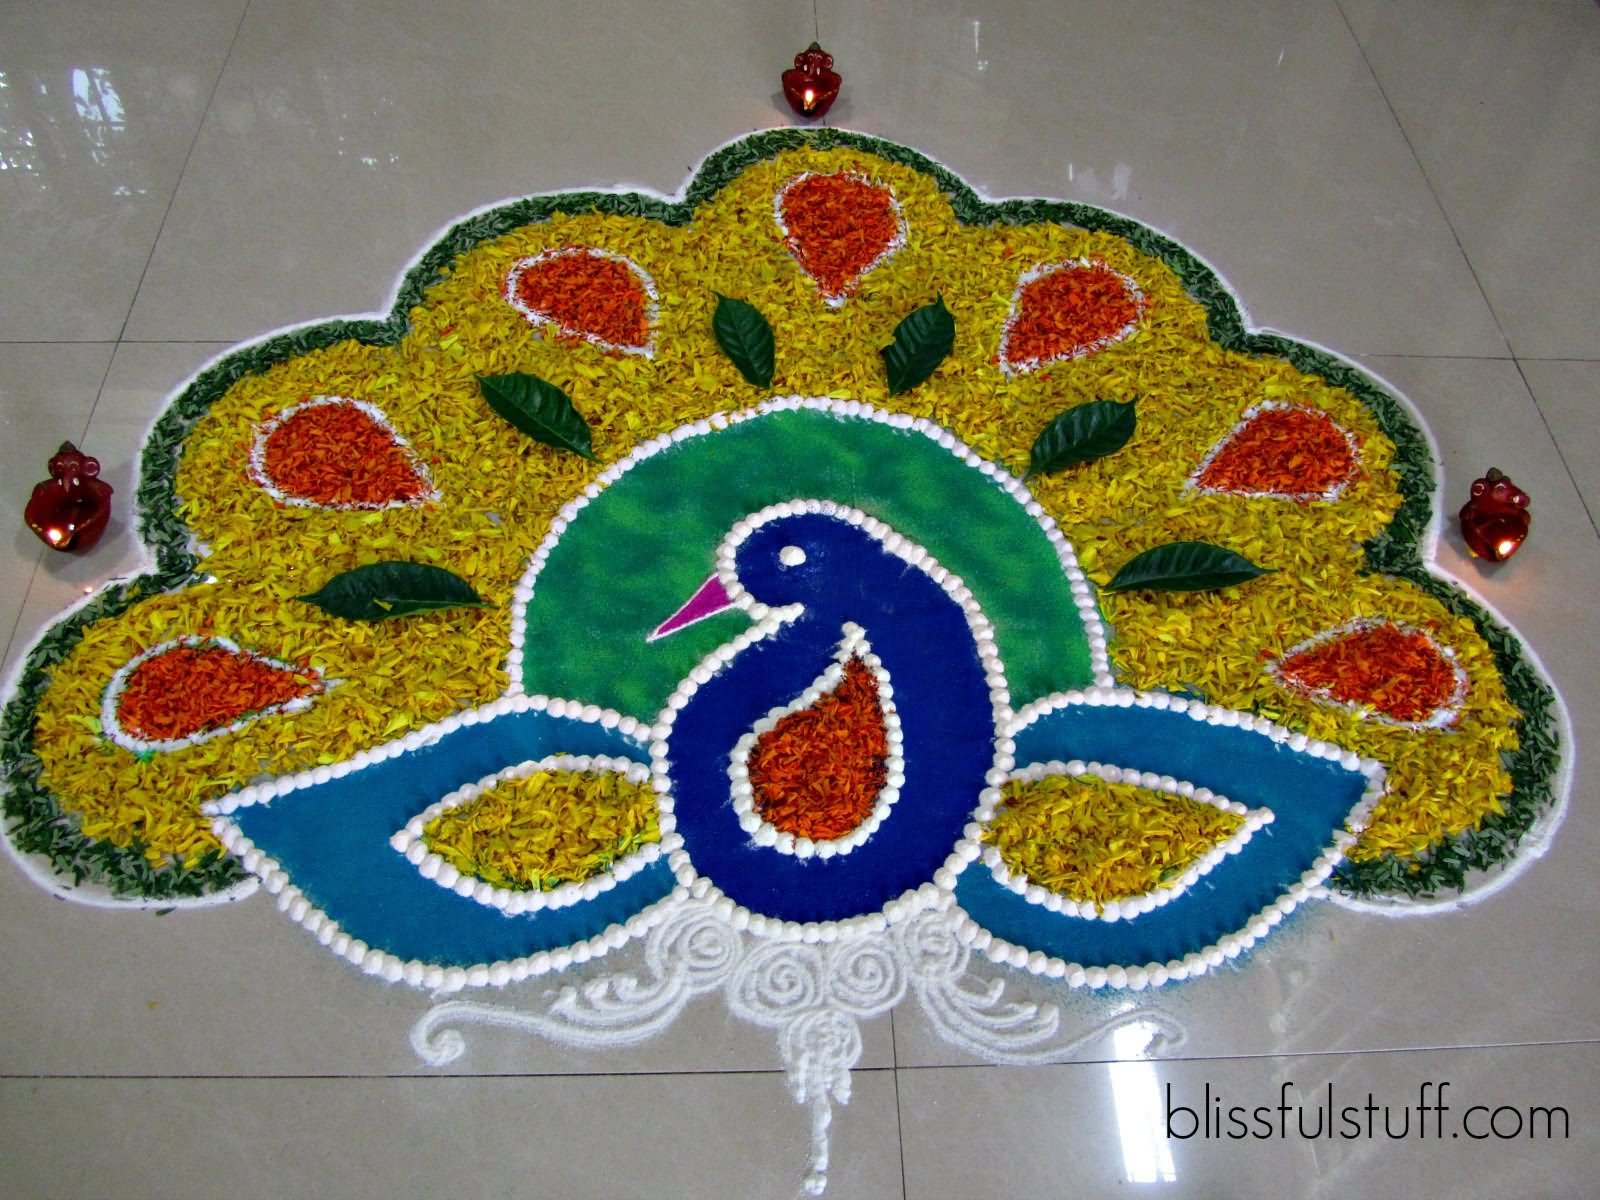 Peacock Rangoli Design With Flowers For Diwali